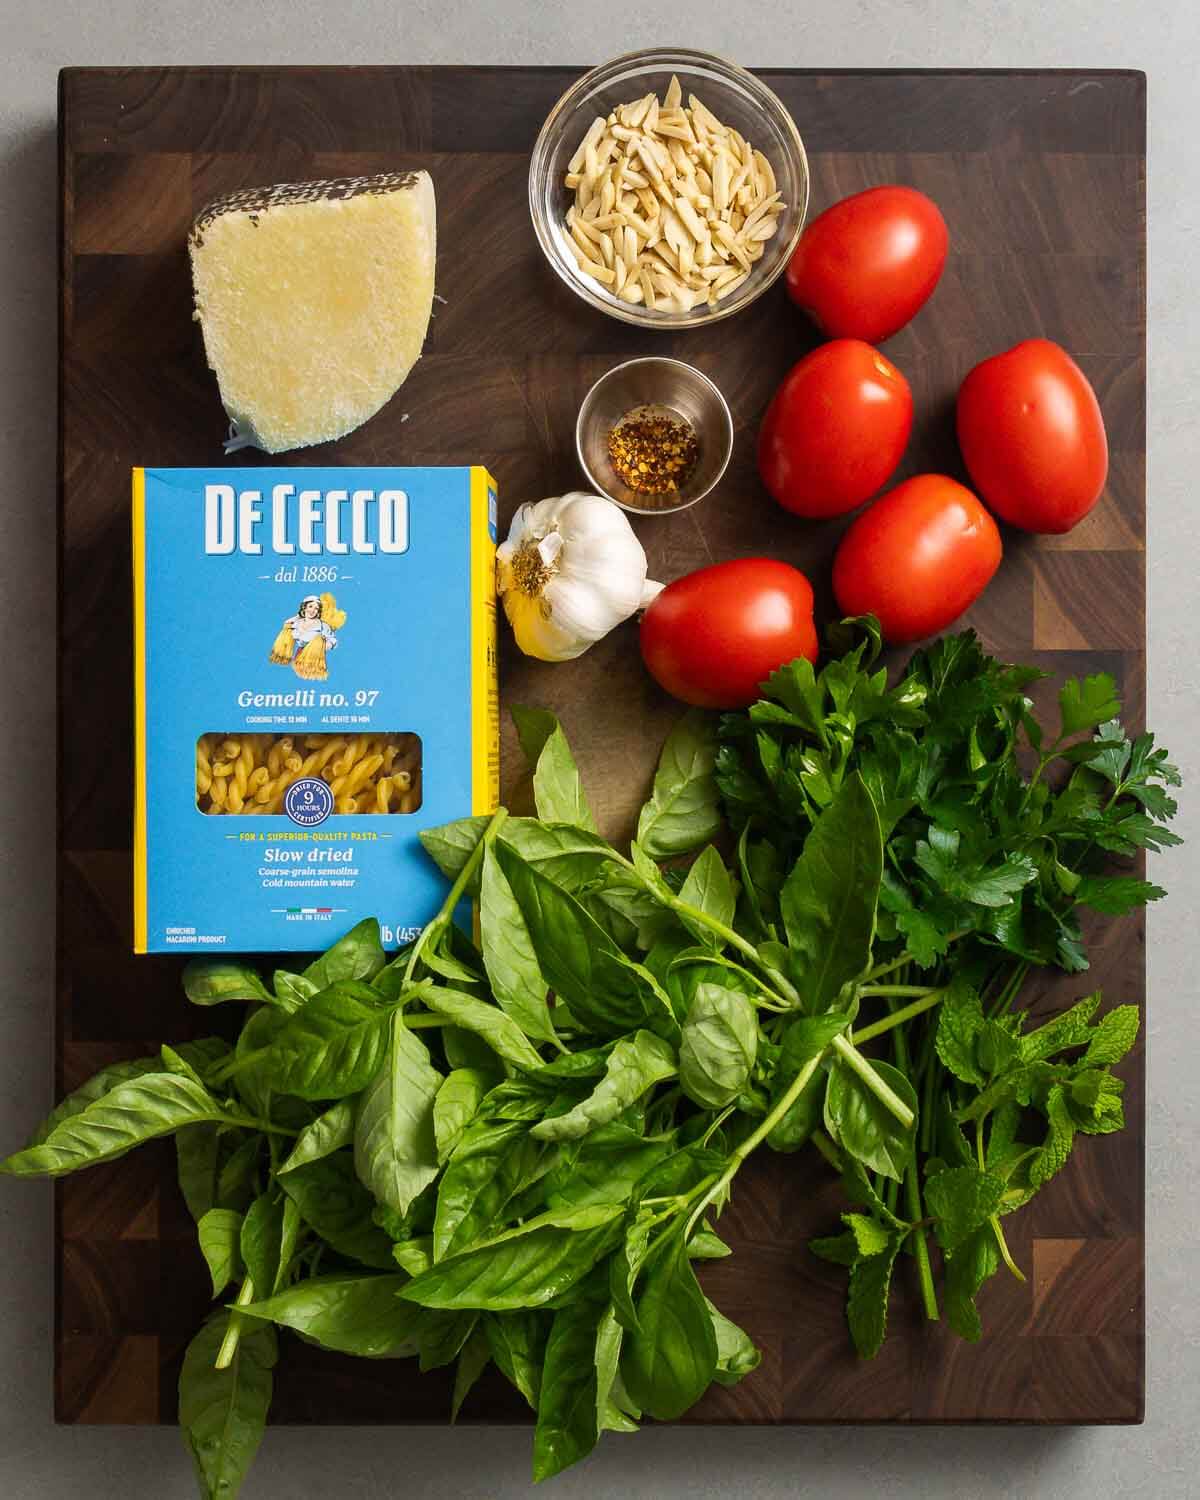 Ingredients shown: Pecorino Romano, almonds, hot red pepper flakes, plum tomatoes, pasta, garlic, basil, parsley, and mint.